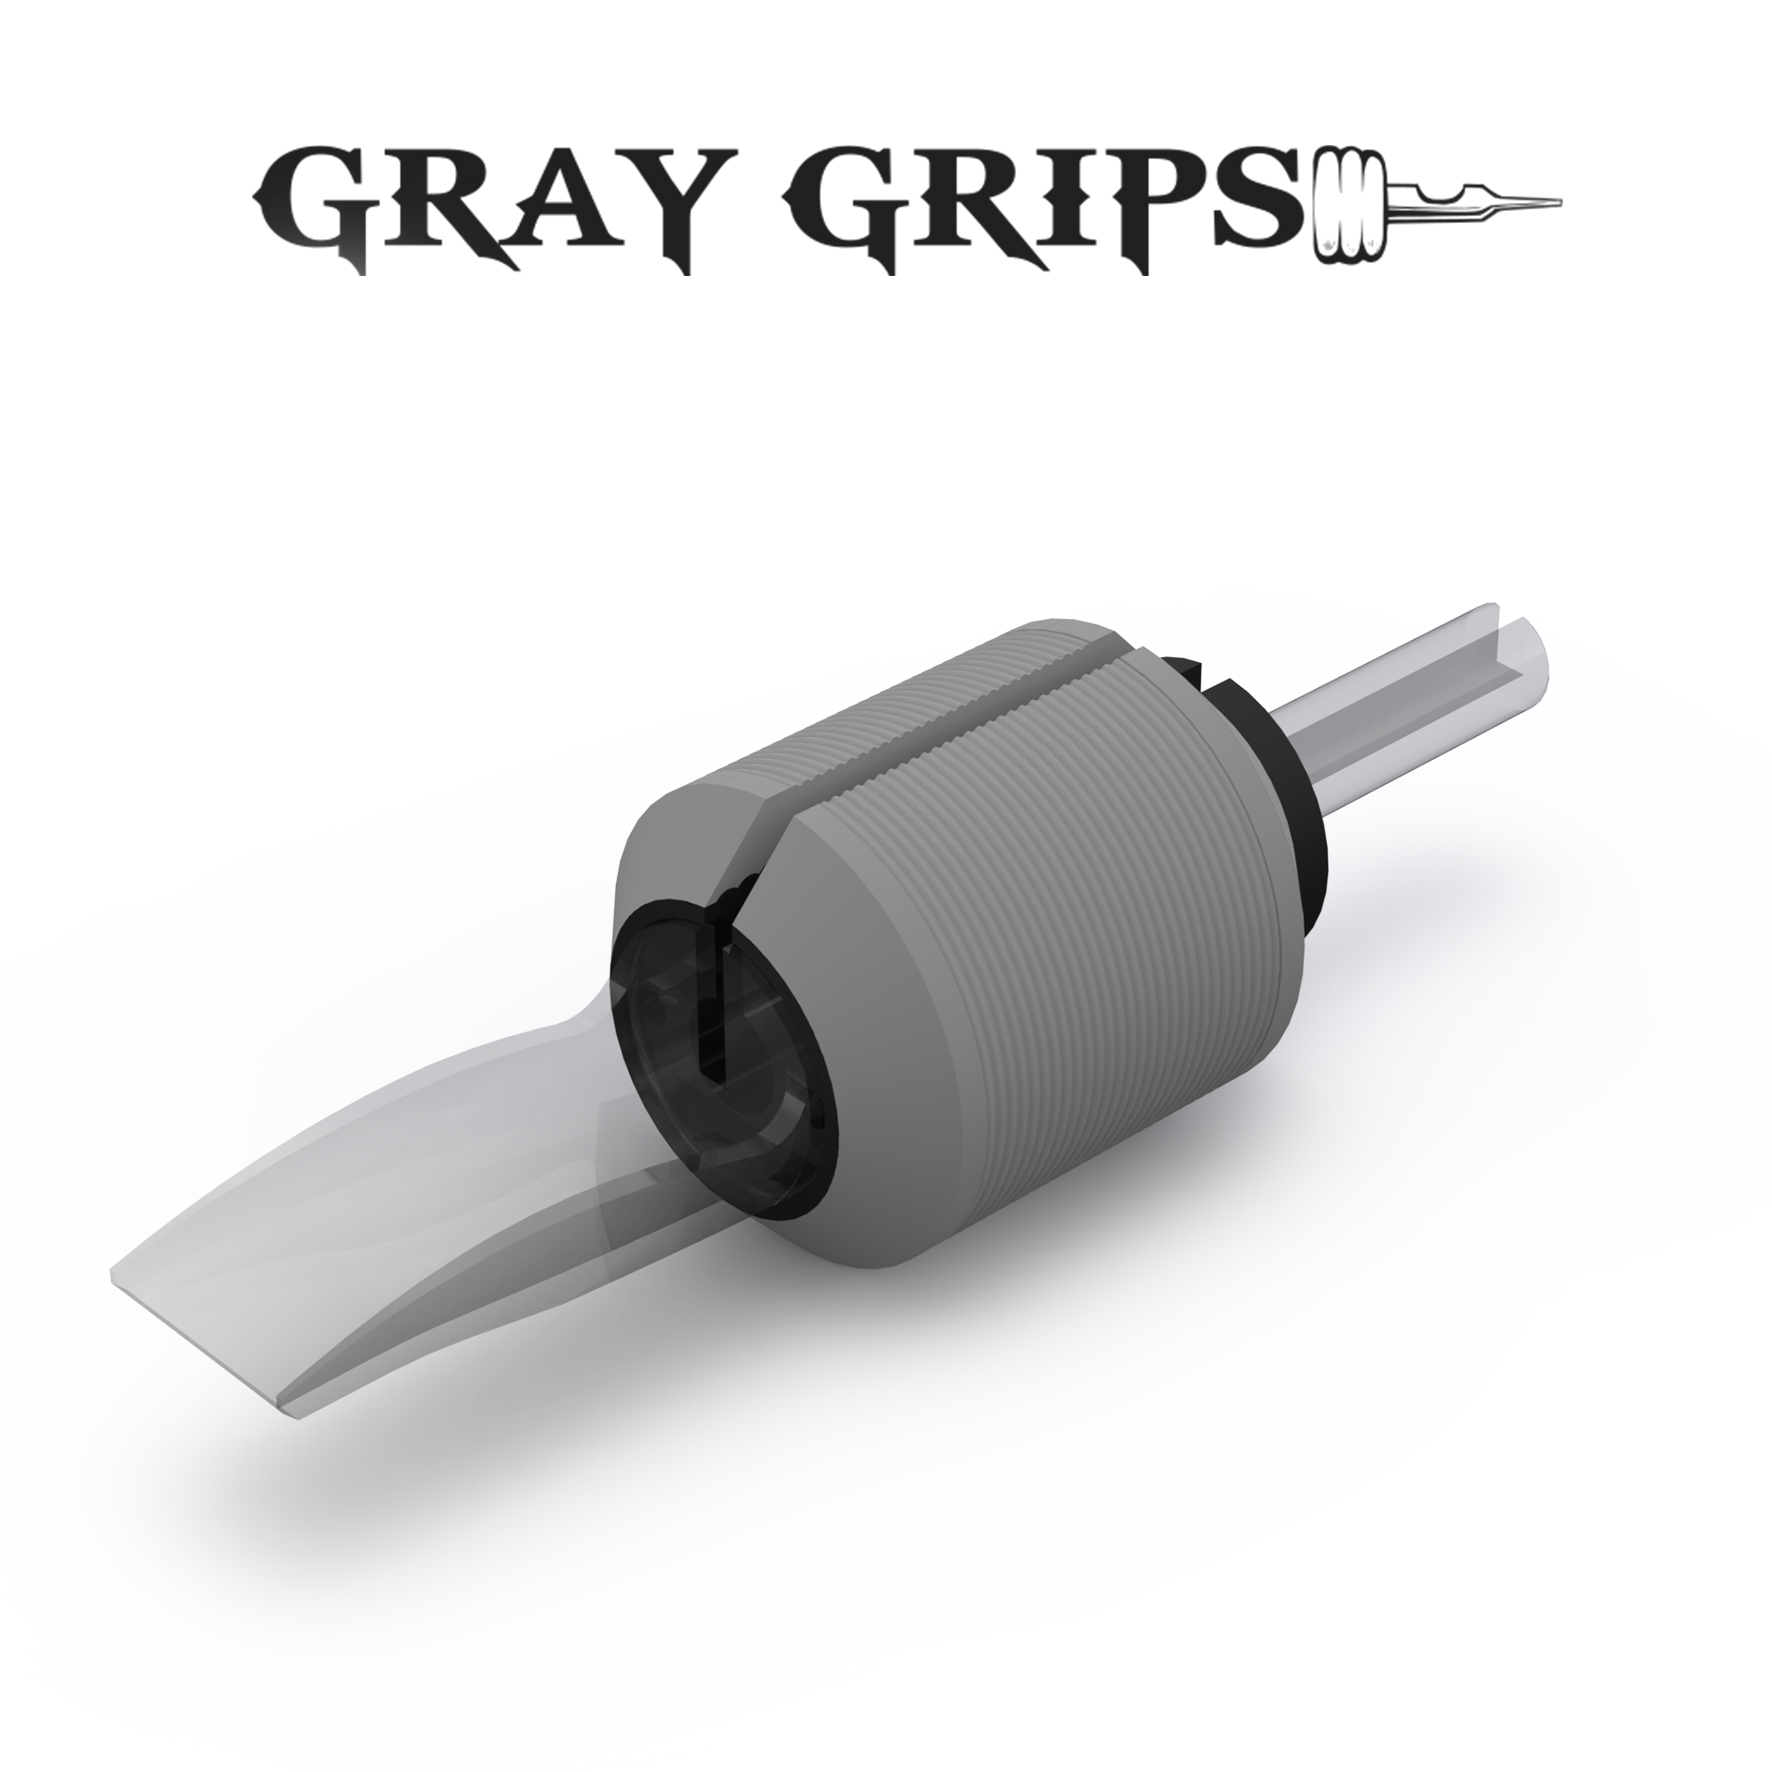 Gray Grips™